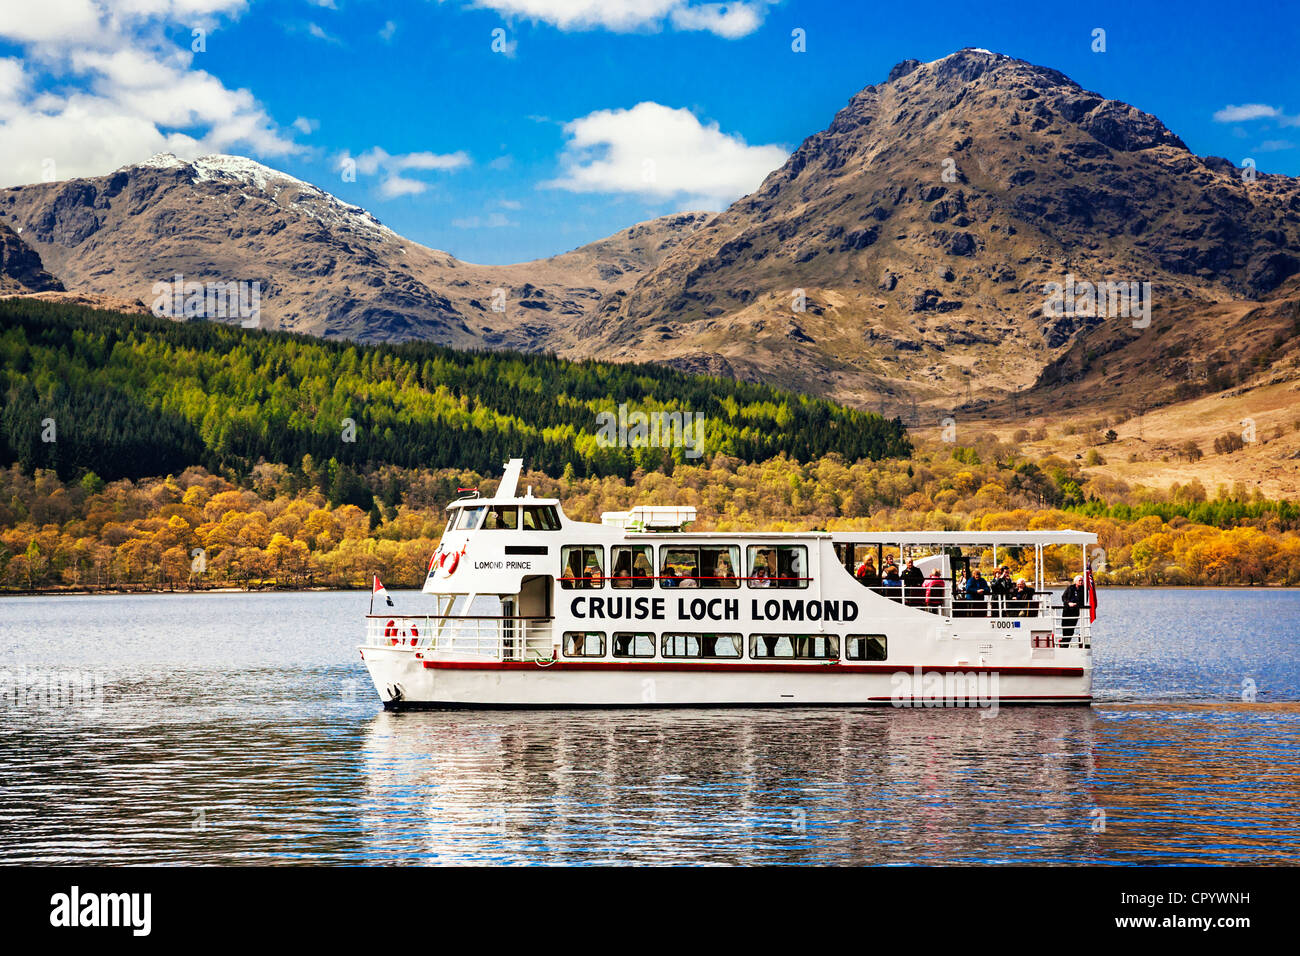 A cruise boat sailing on Loch Lomond, Scotland. Stock Photo